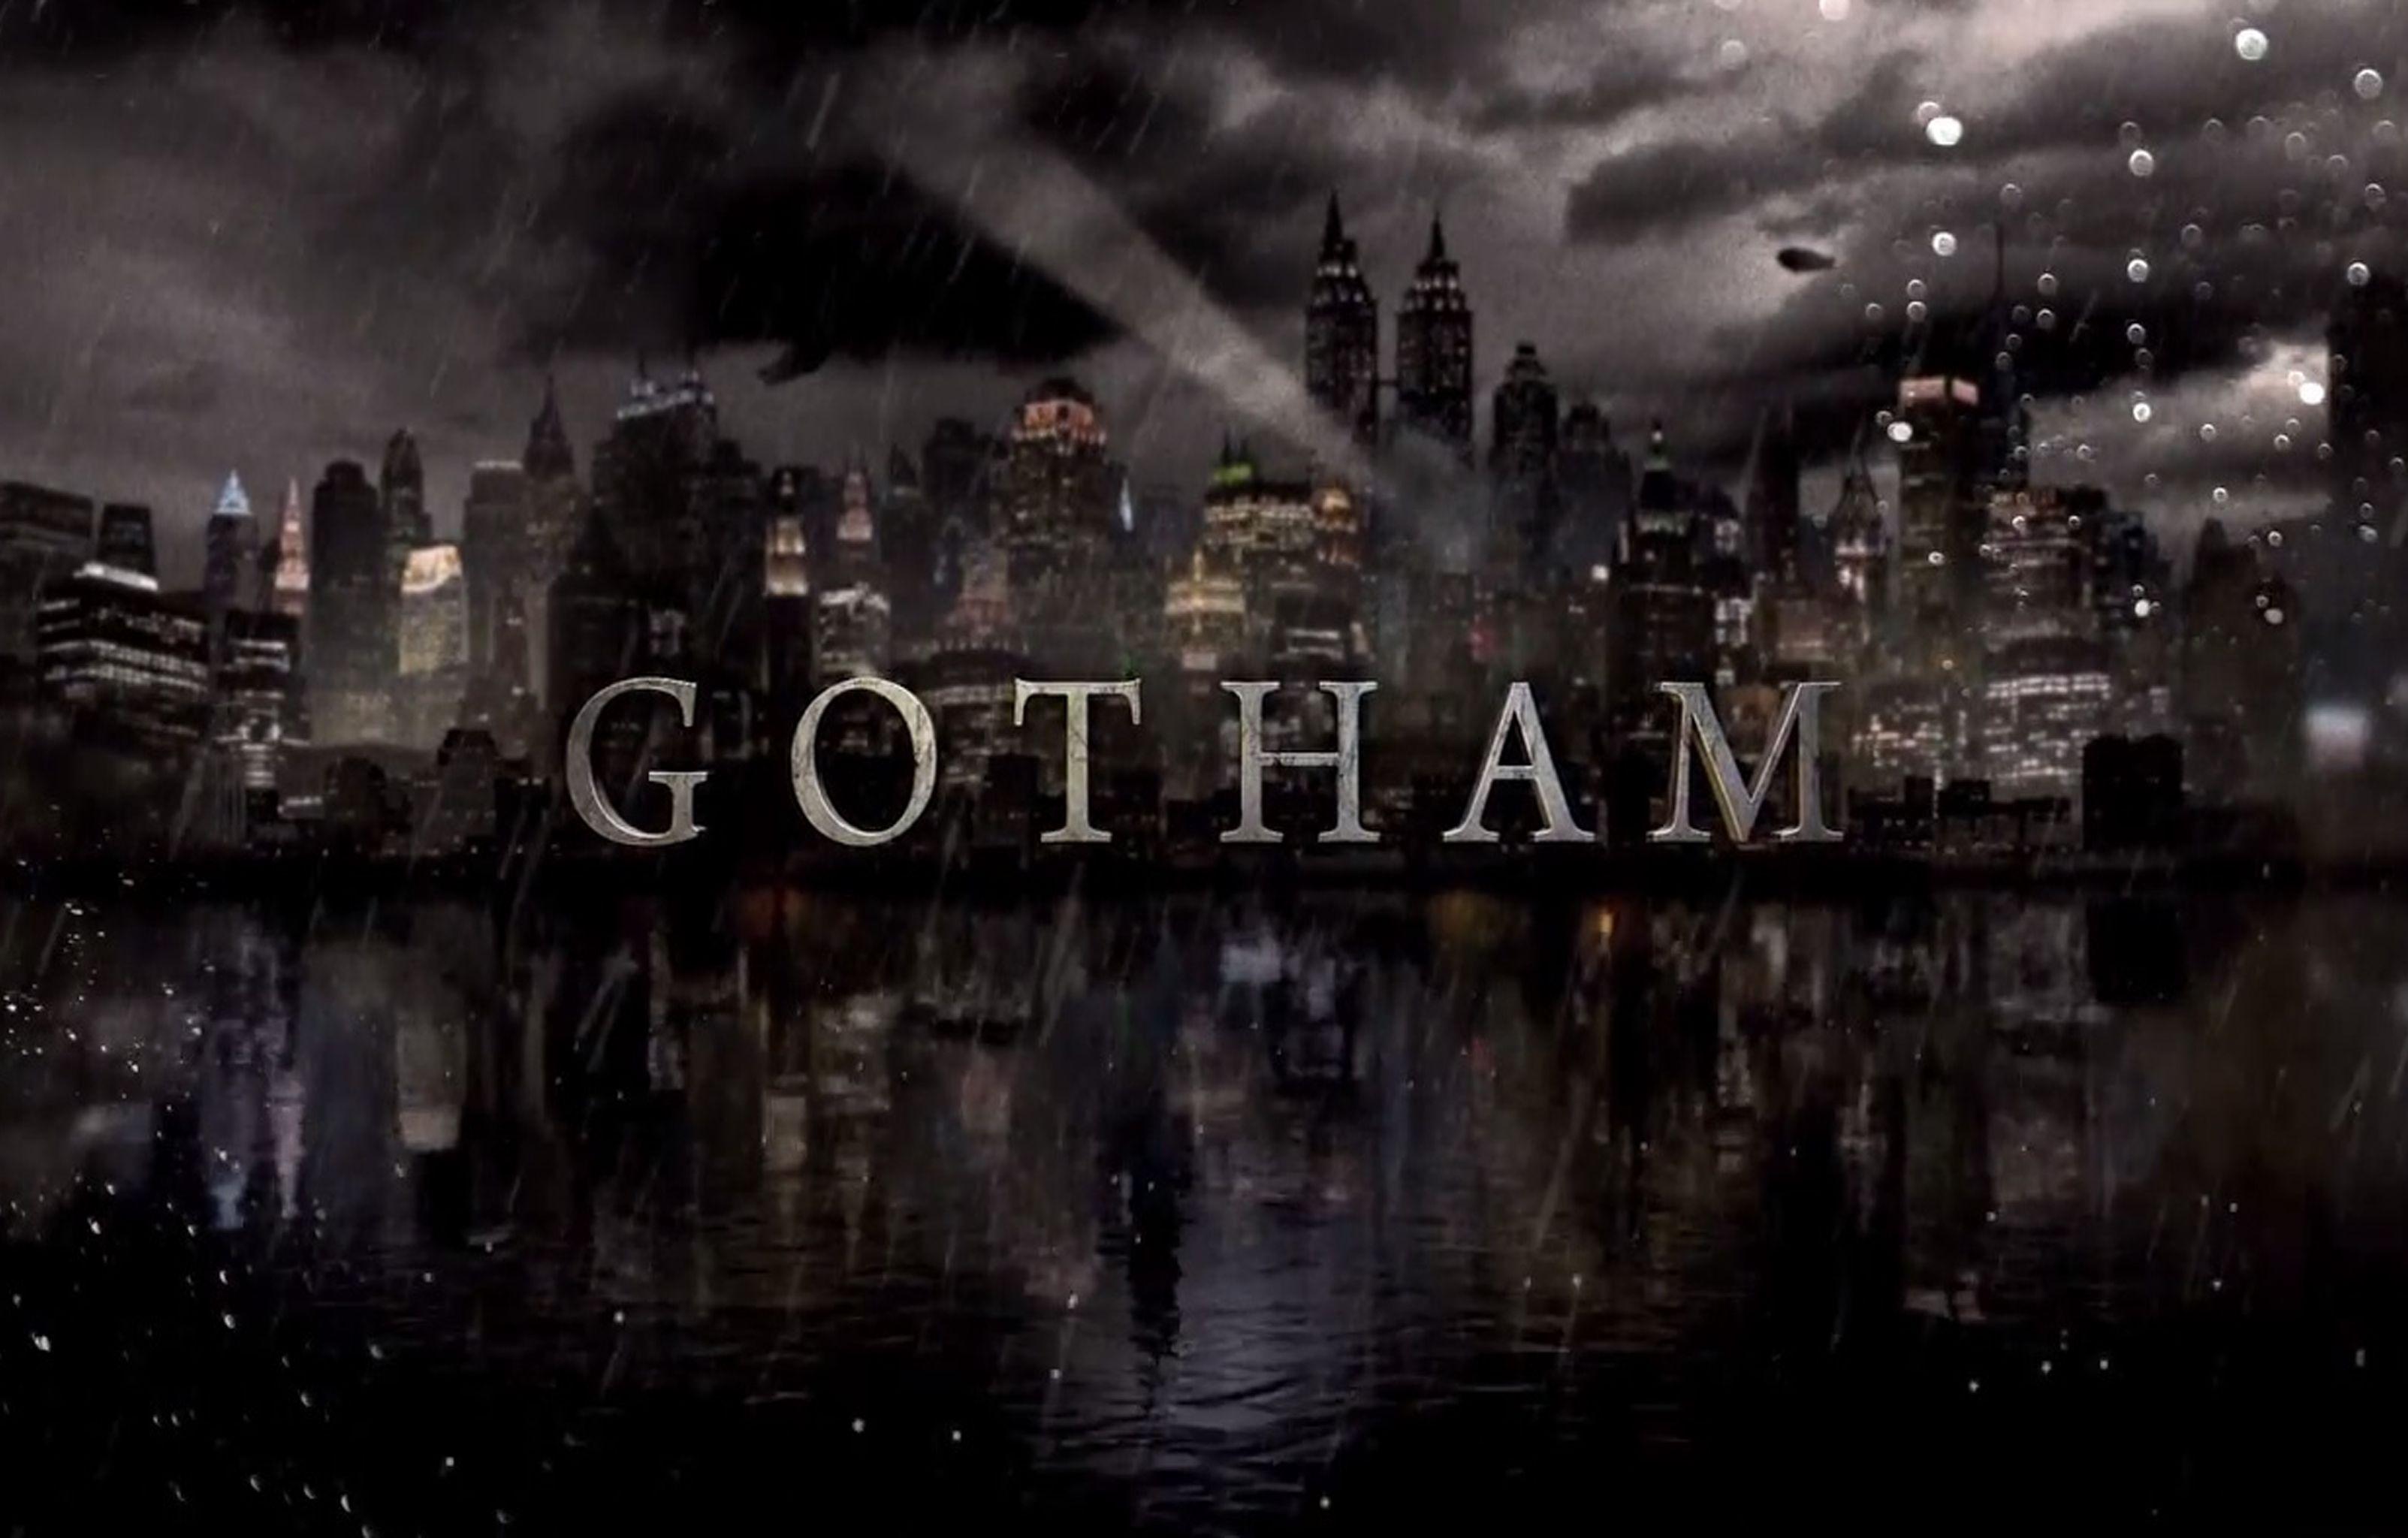 Gorgeous Picture: Gotham TV Wallpaper, Amazing Gotham TV Image